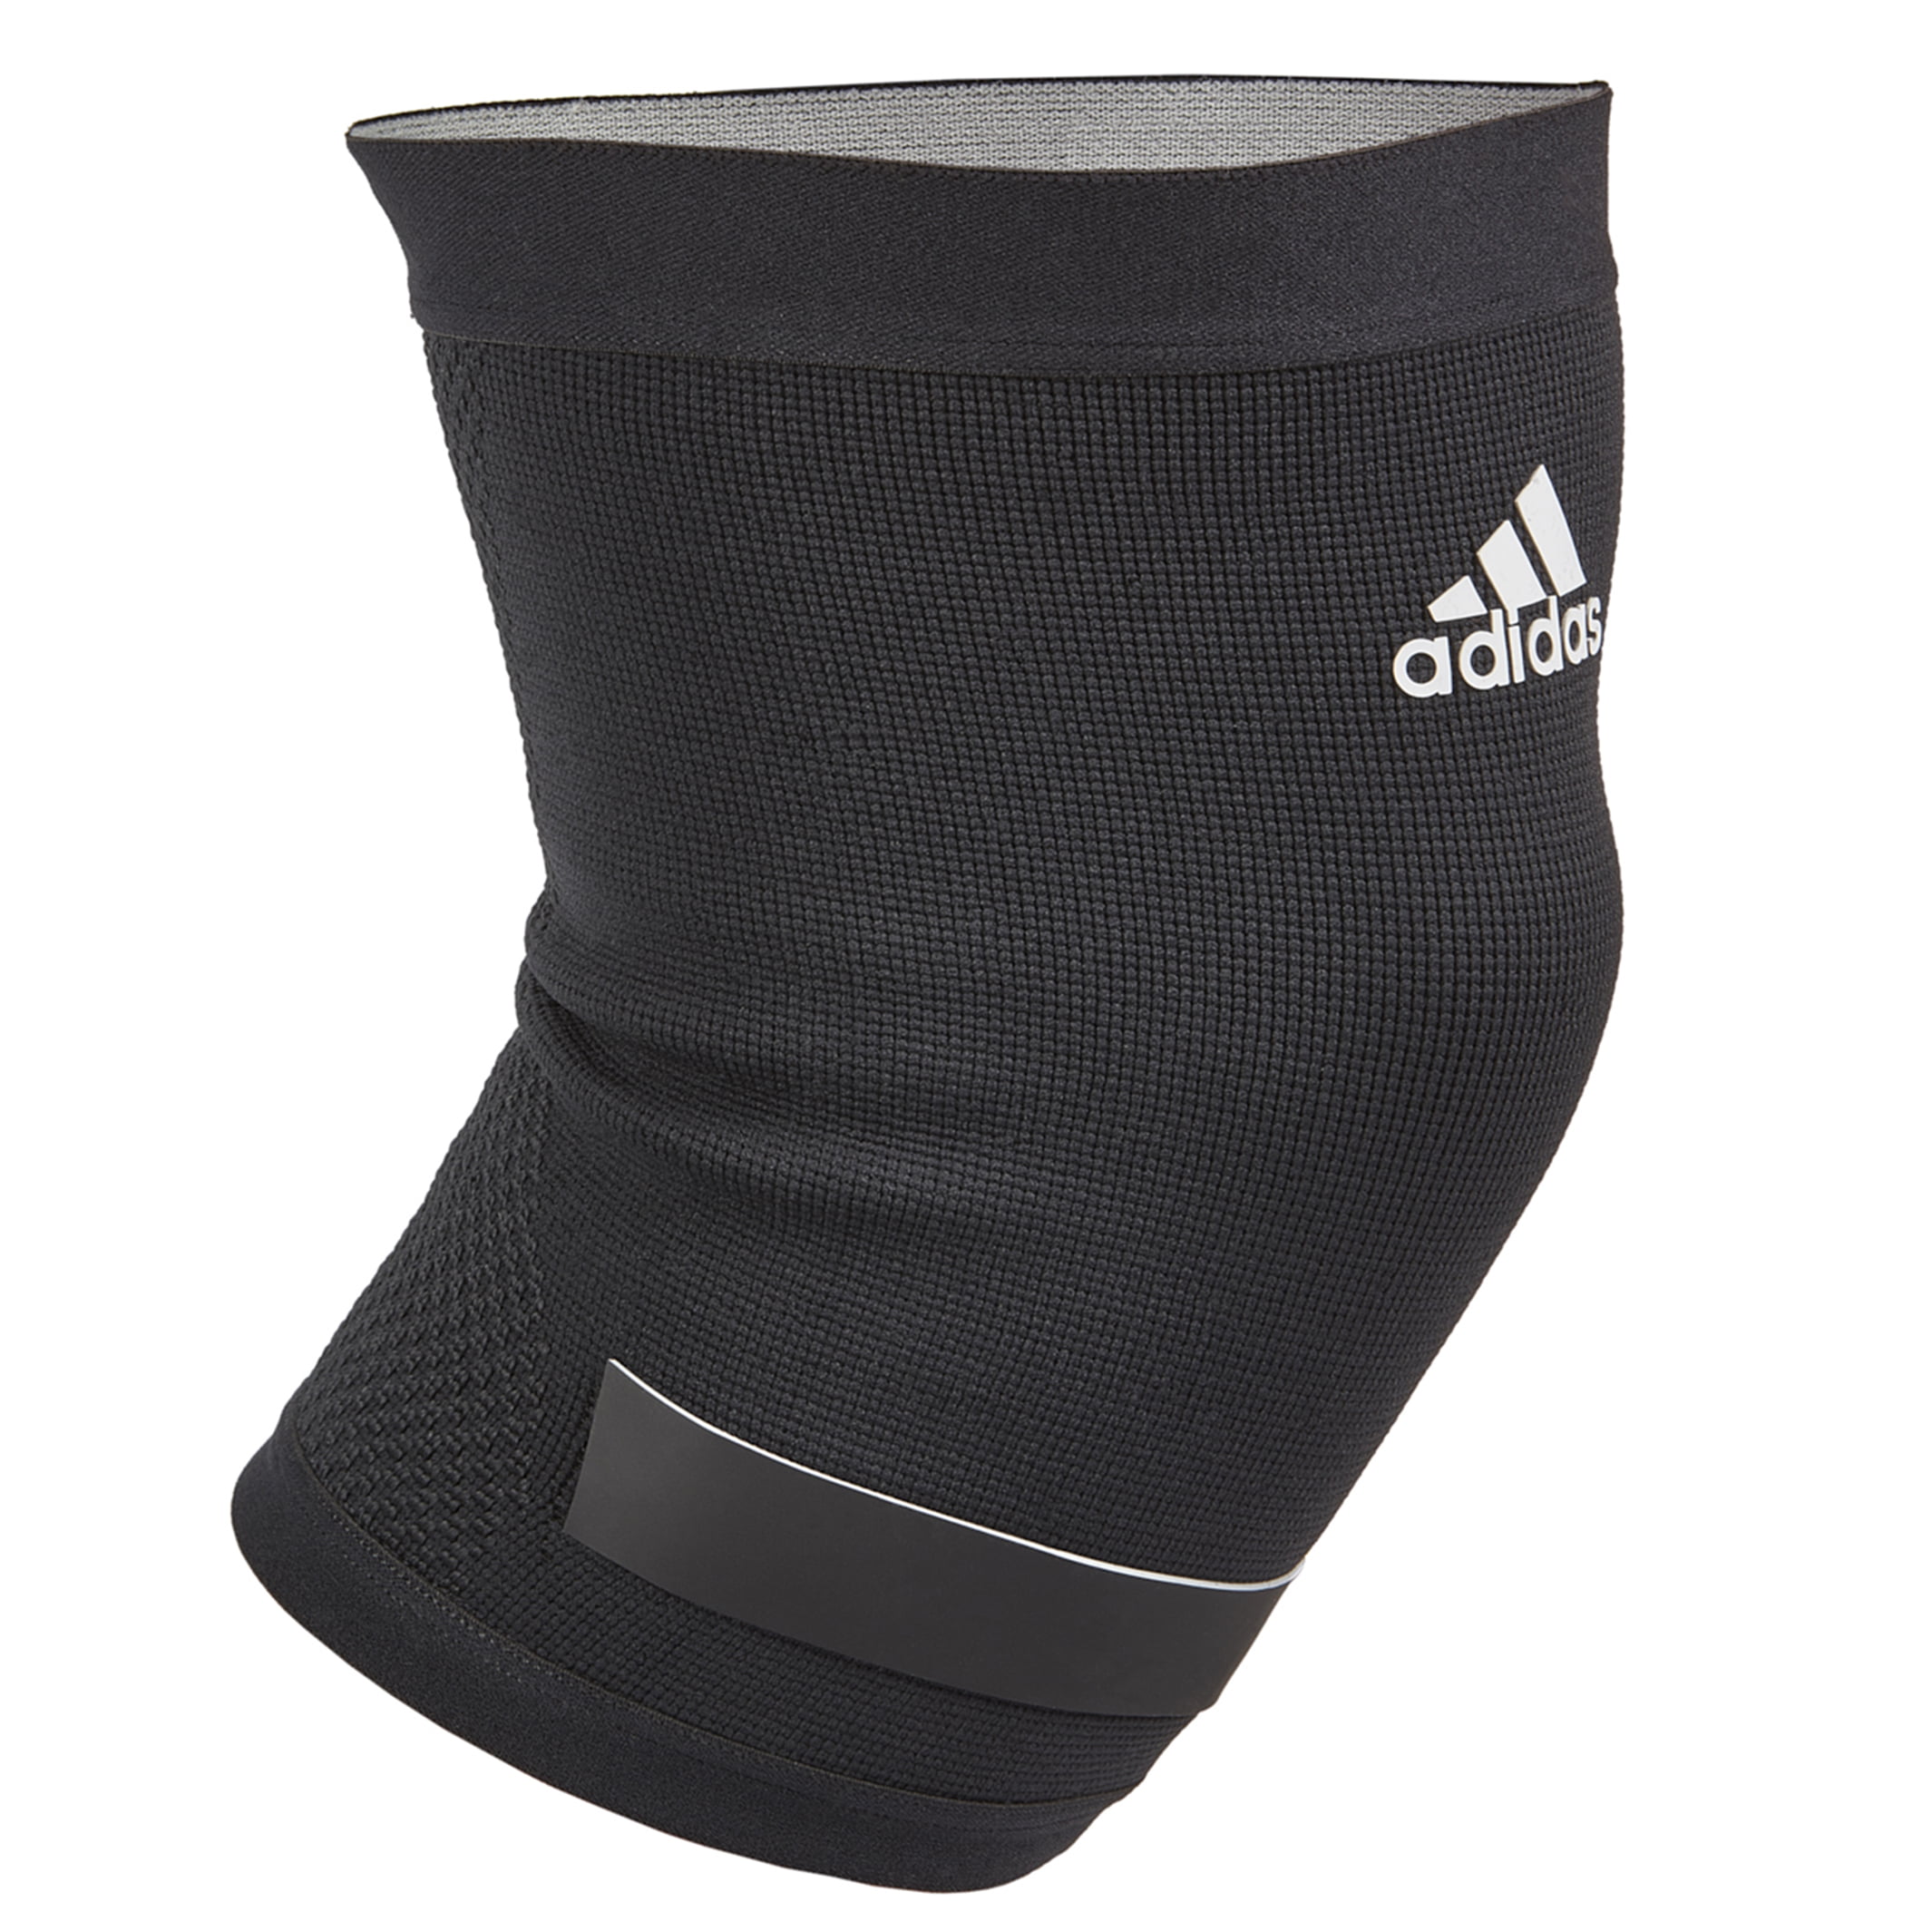 Adidas Climacool Knee Support - Walmart 